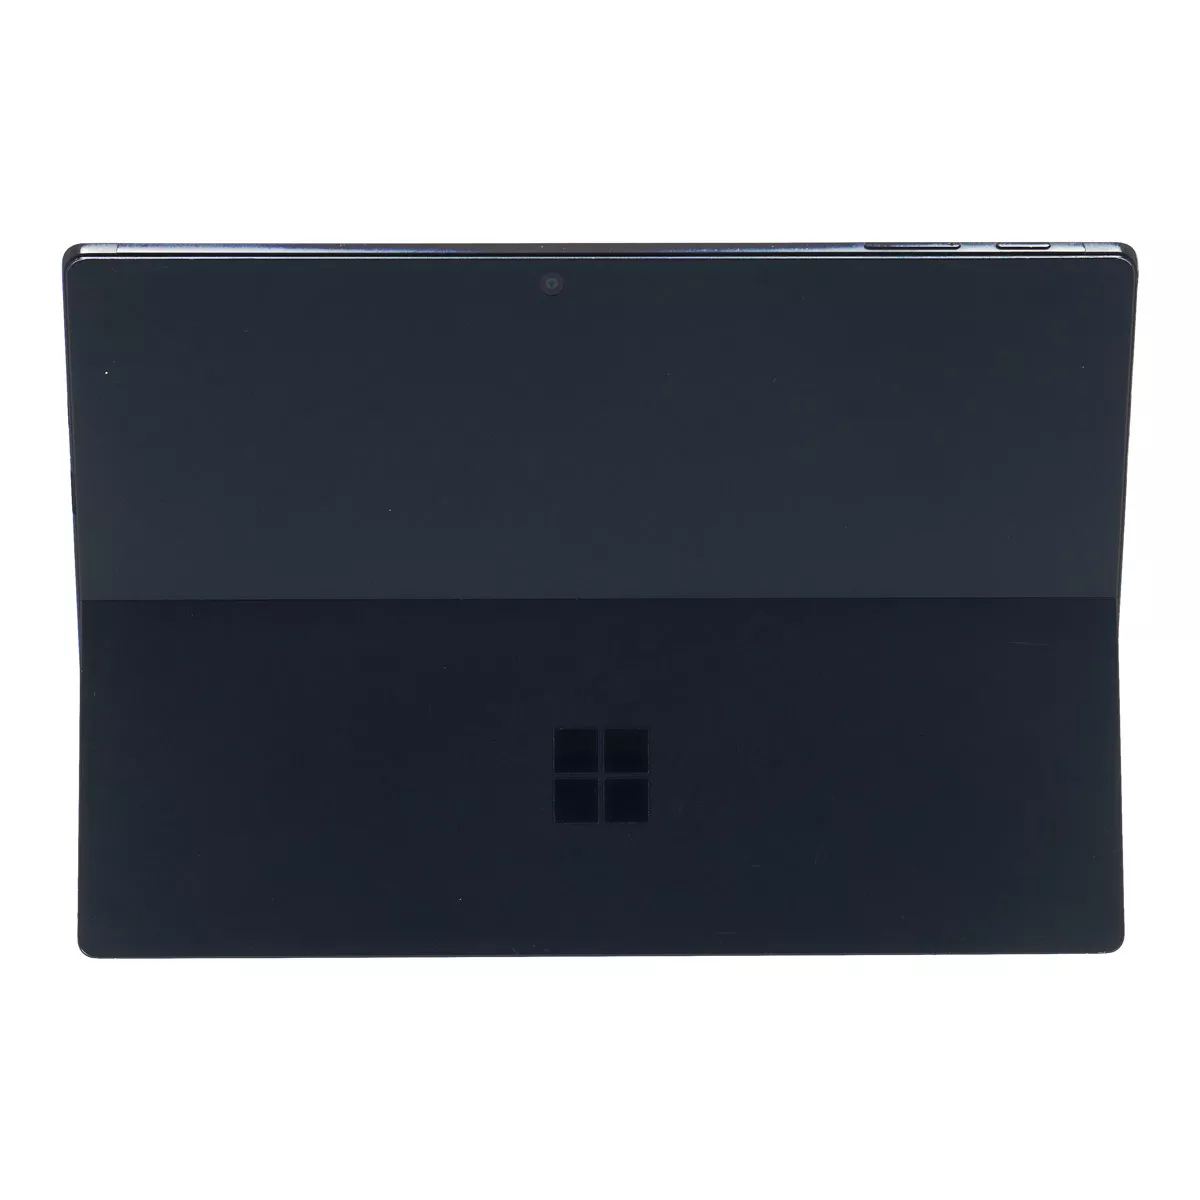 Microsoft Surface Pro 7 Core i5 1035G4 8 GB 240 GB SSD Webcam Black B